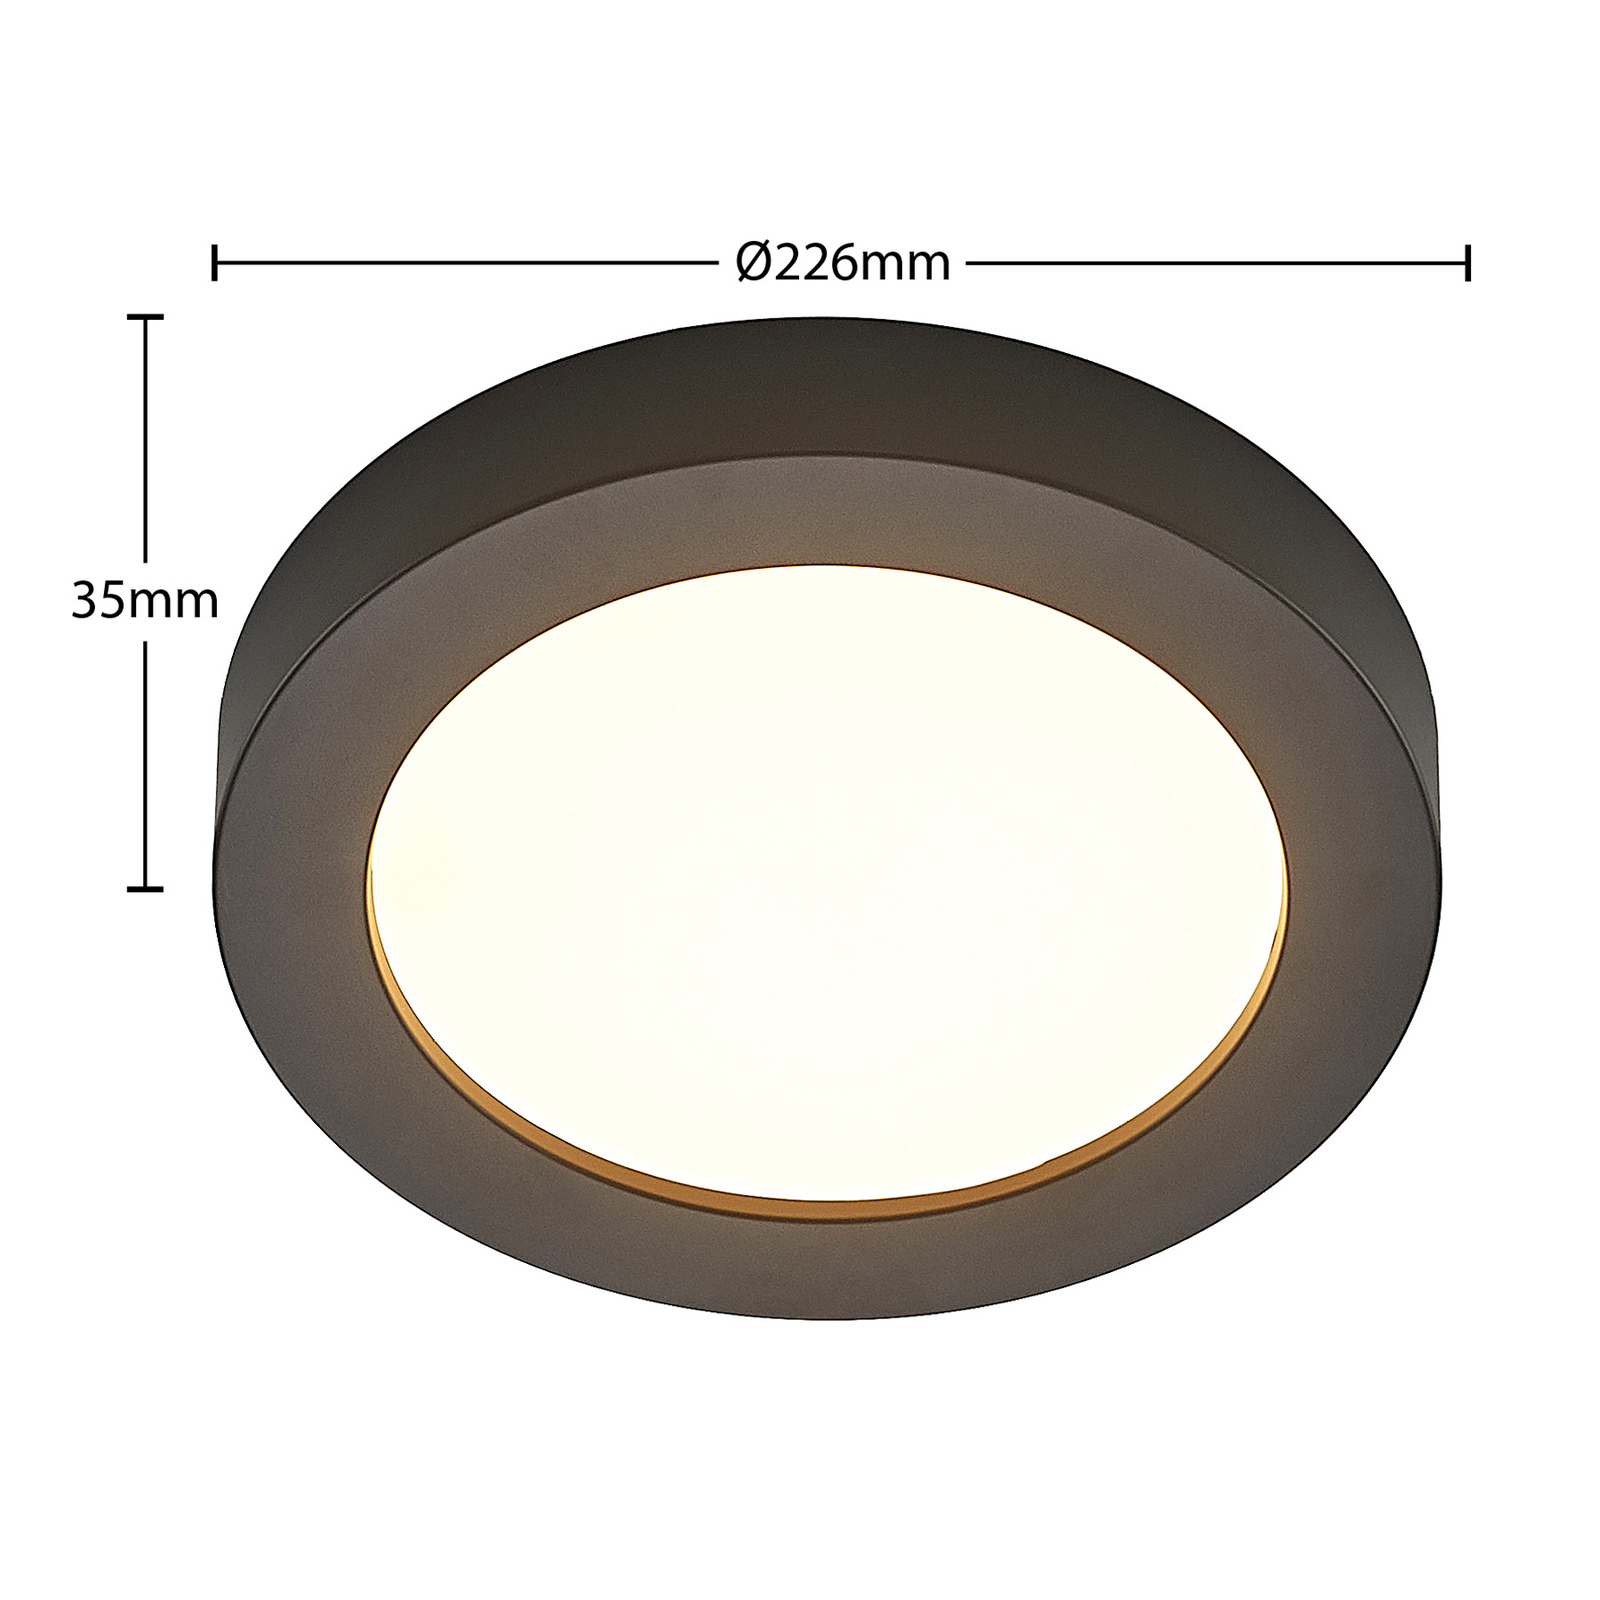 Lampa sufitowa LED Prios Edwina, czarna, CCT, 22,6 cm